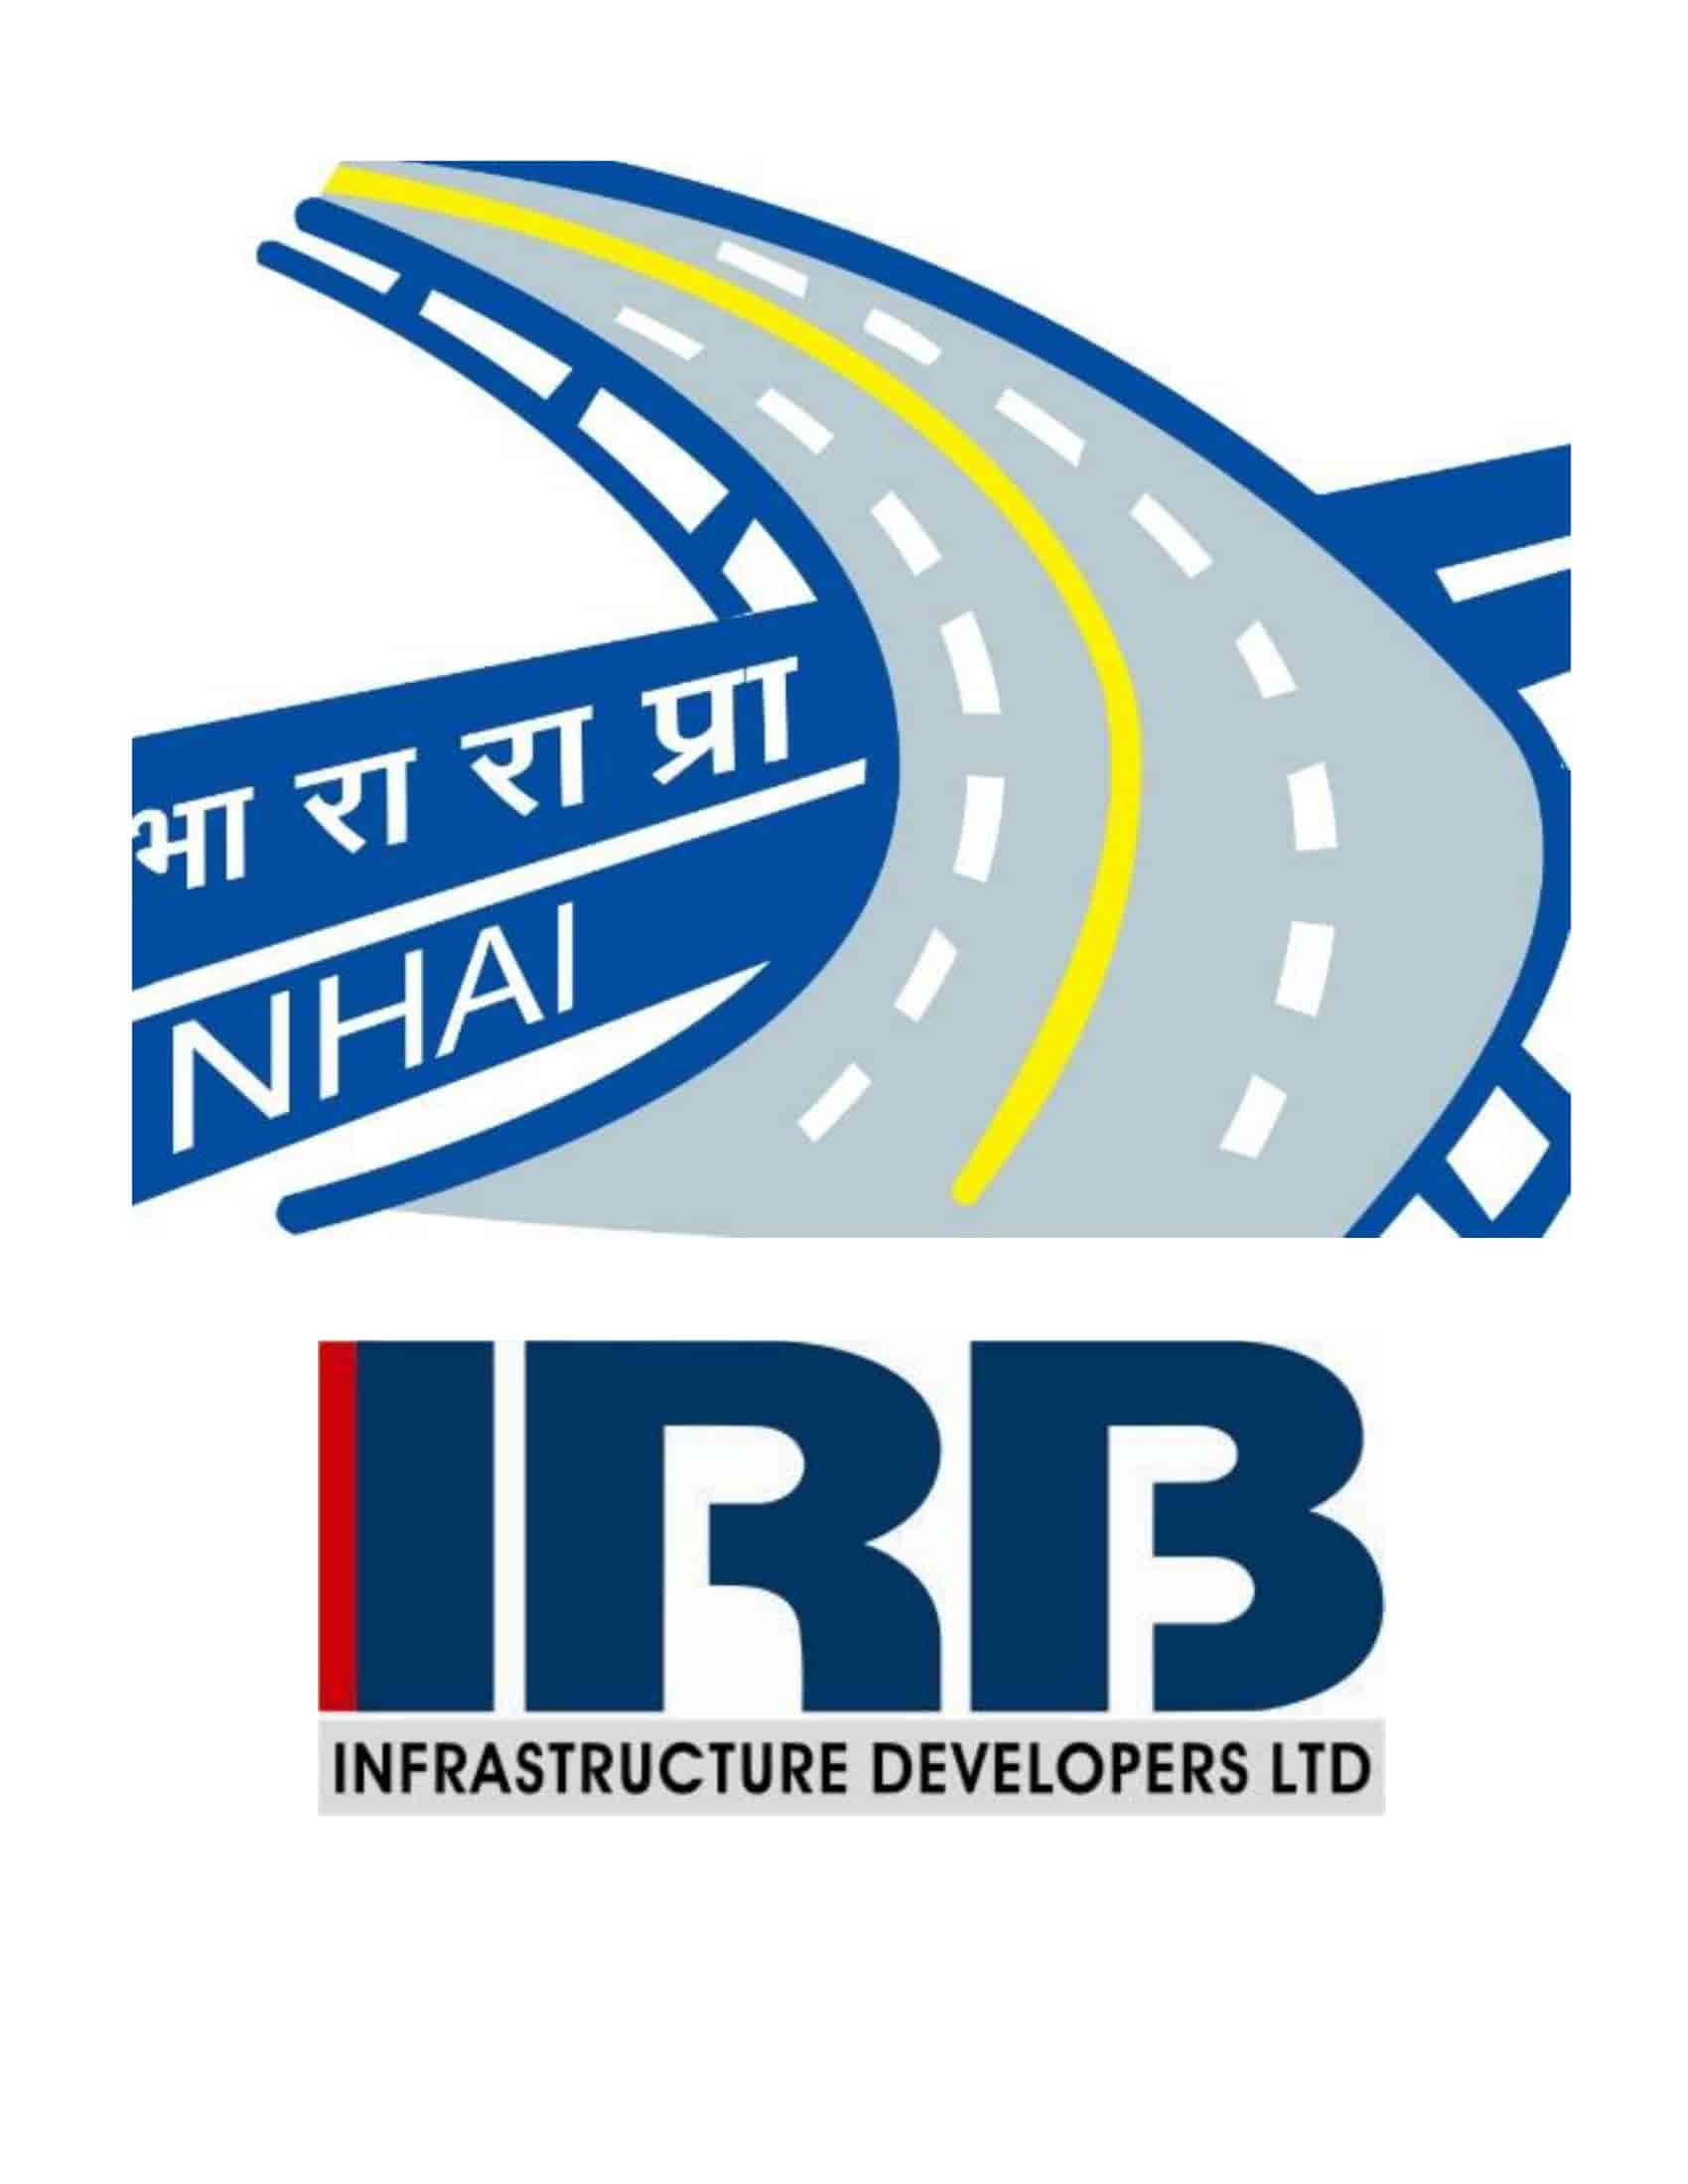 IRB Logo - Nhai Irb 1 Min. Estrade. India Business News, Financial News